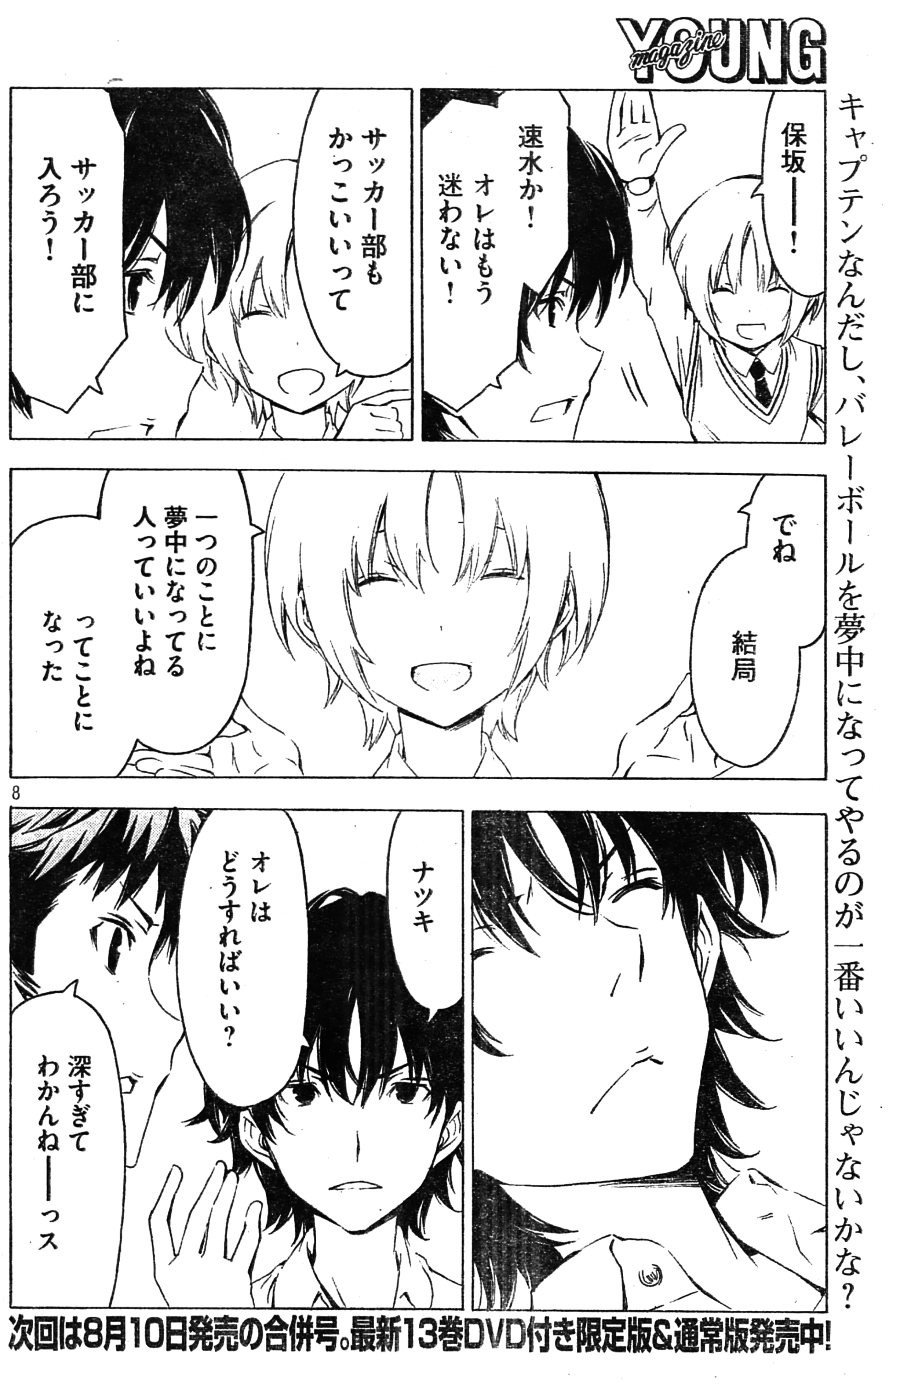 Minami-ke - Chapter 273 - Page 8